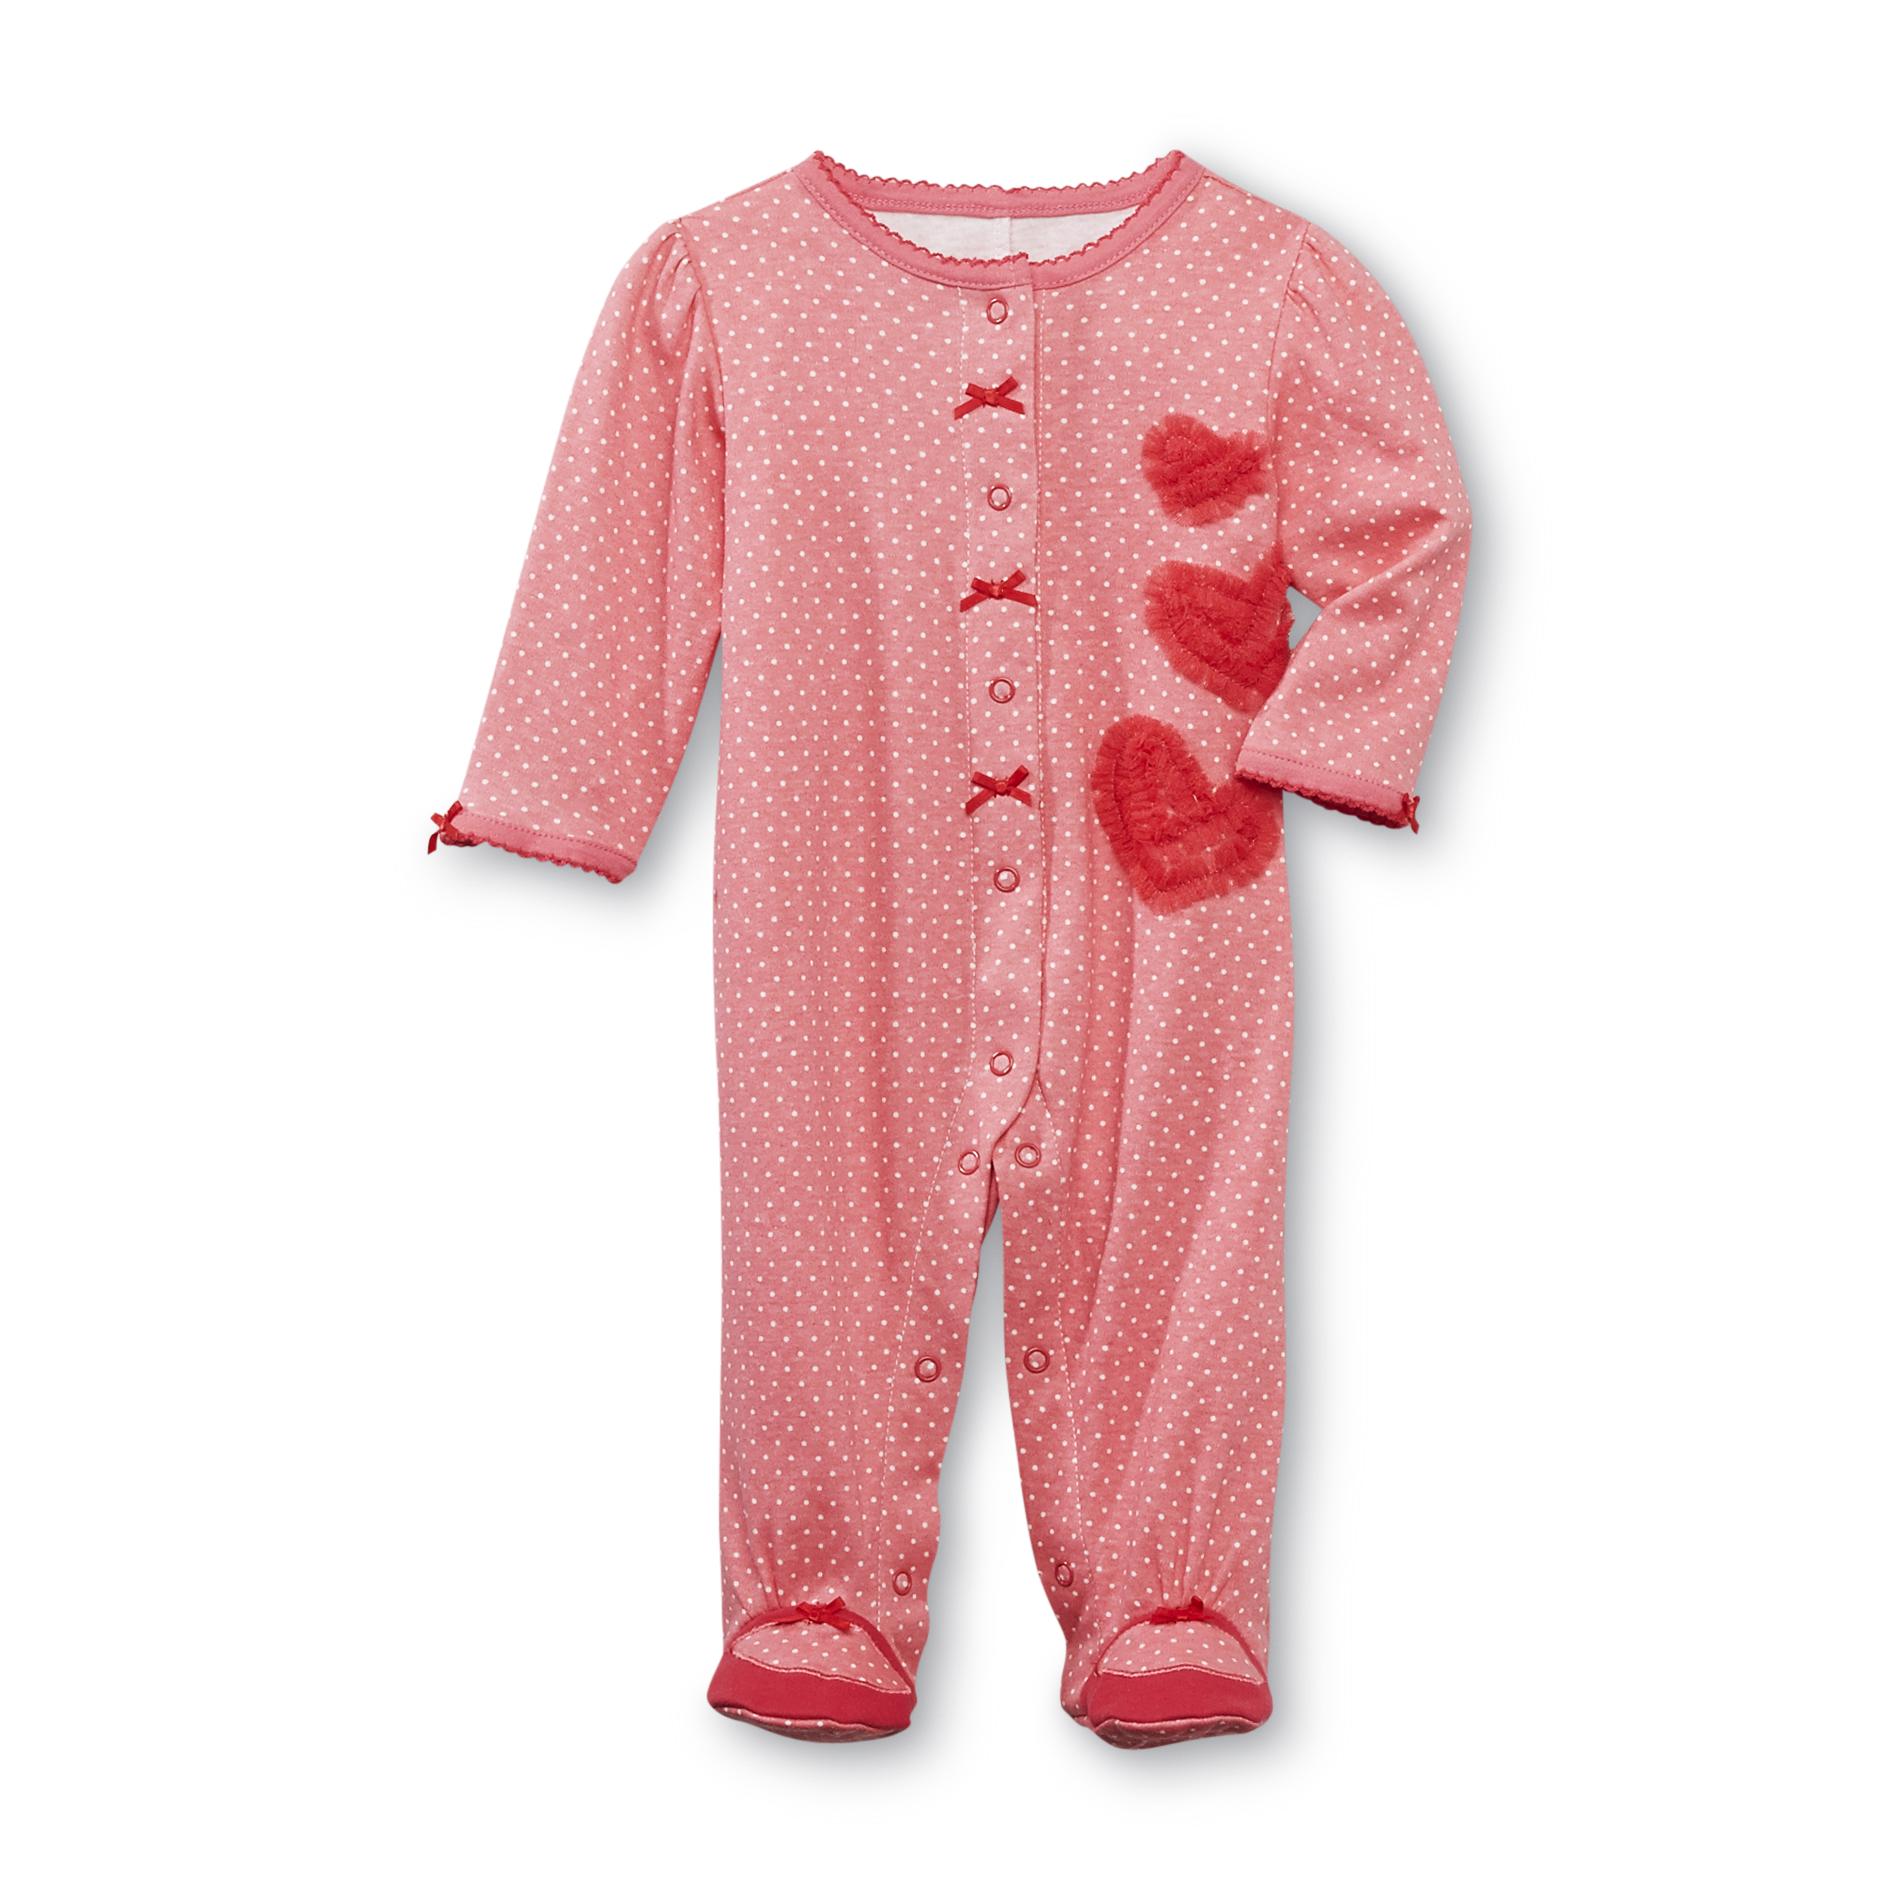 Little Wonders Newborn Girl's Sleeper Pajamas - Polka Dots